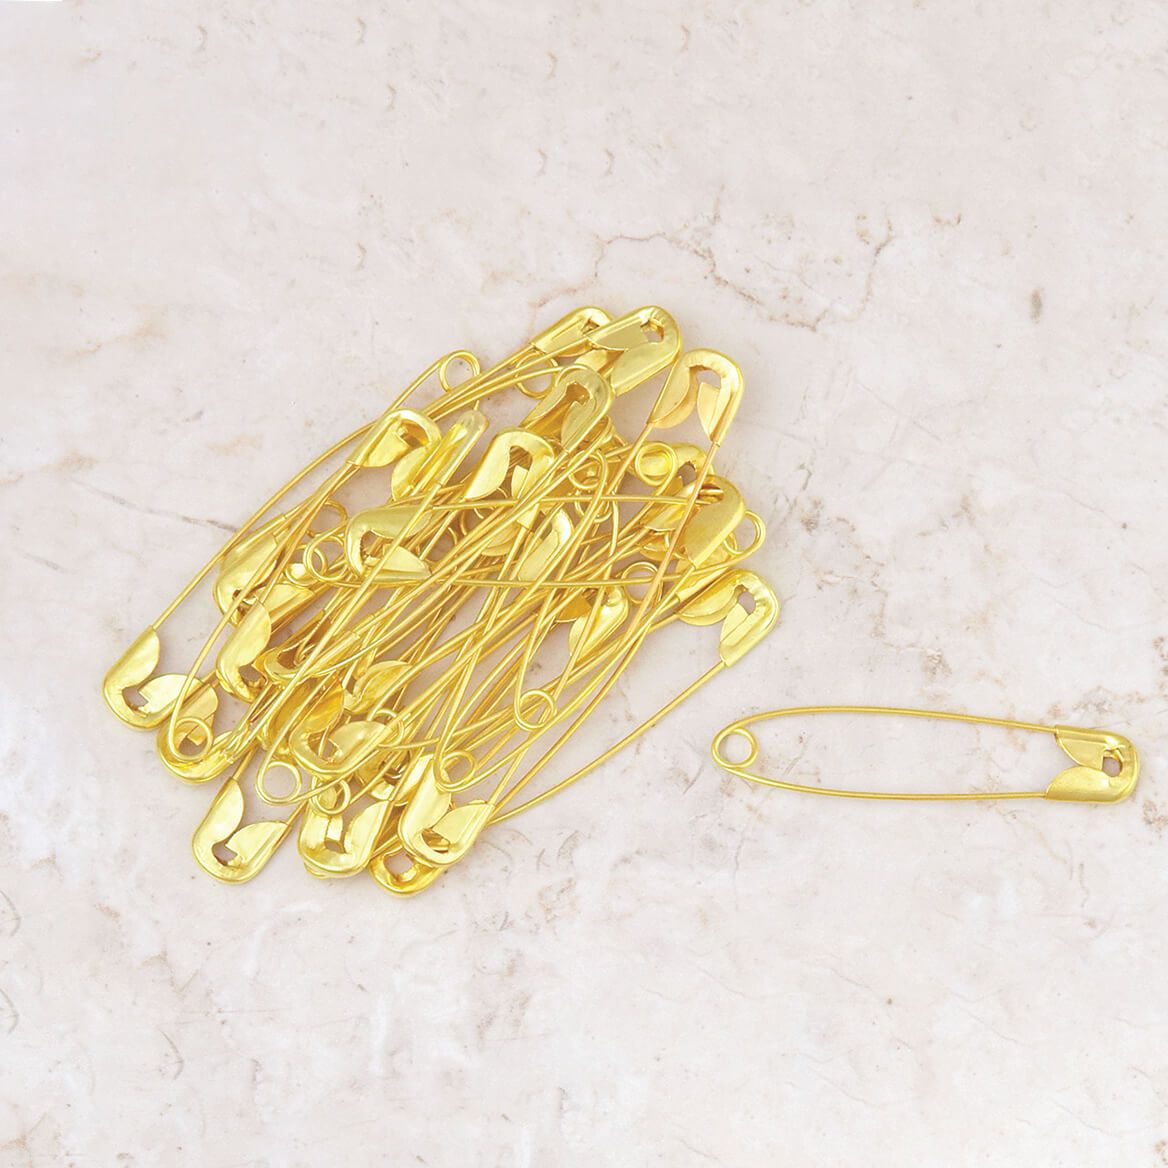 Jumbo Gold Tone Safety Pins, Set of 30 + '-' + 375513